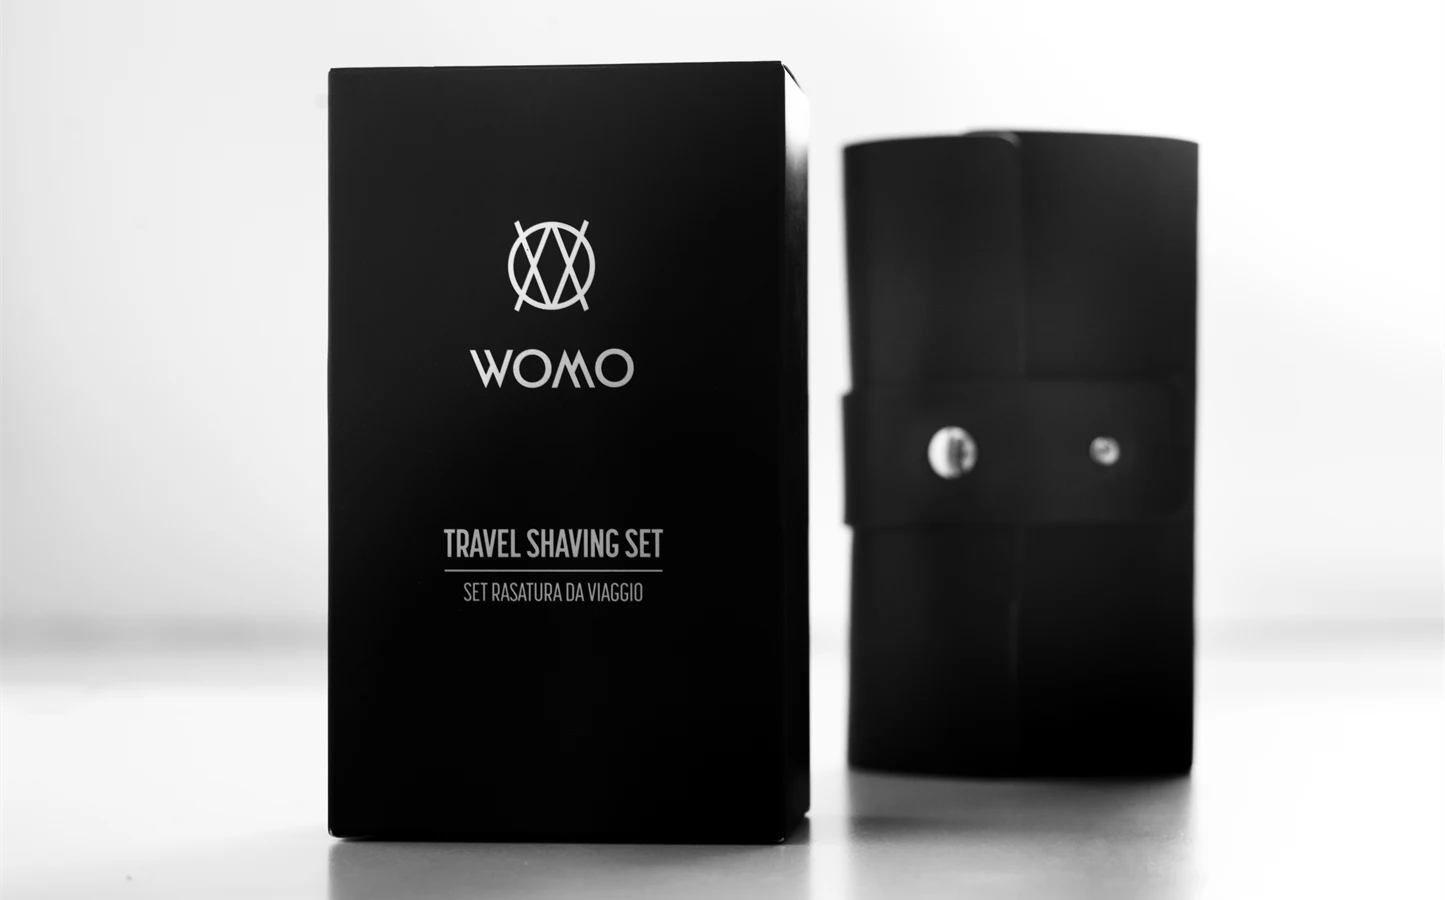 WOMO travel shaving kit packaging